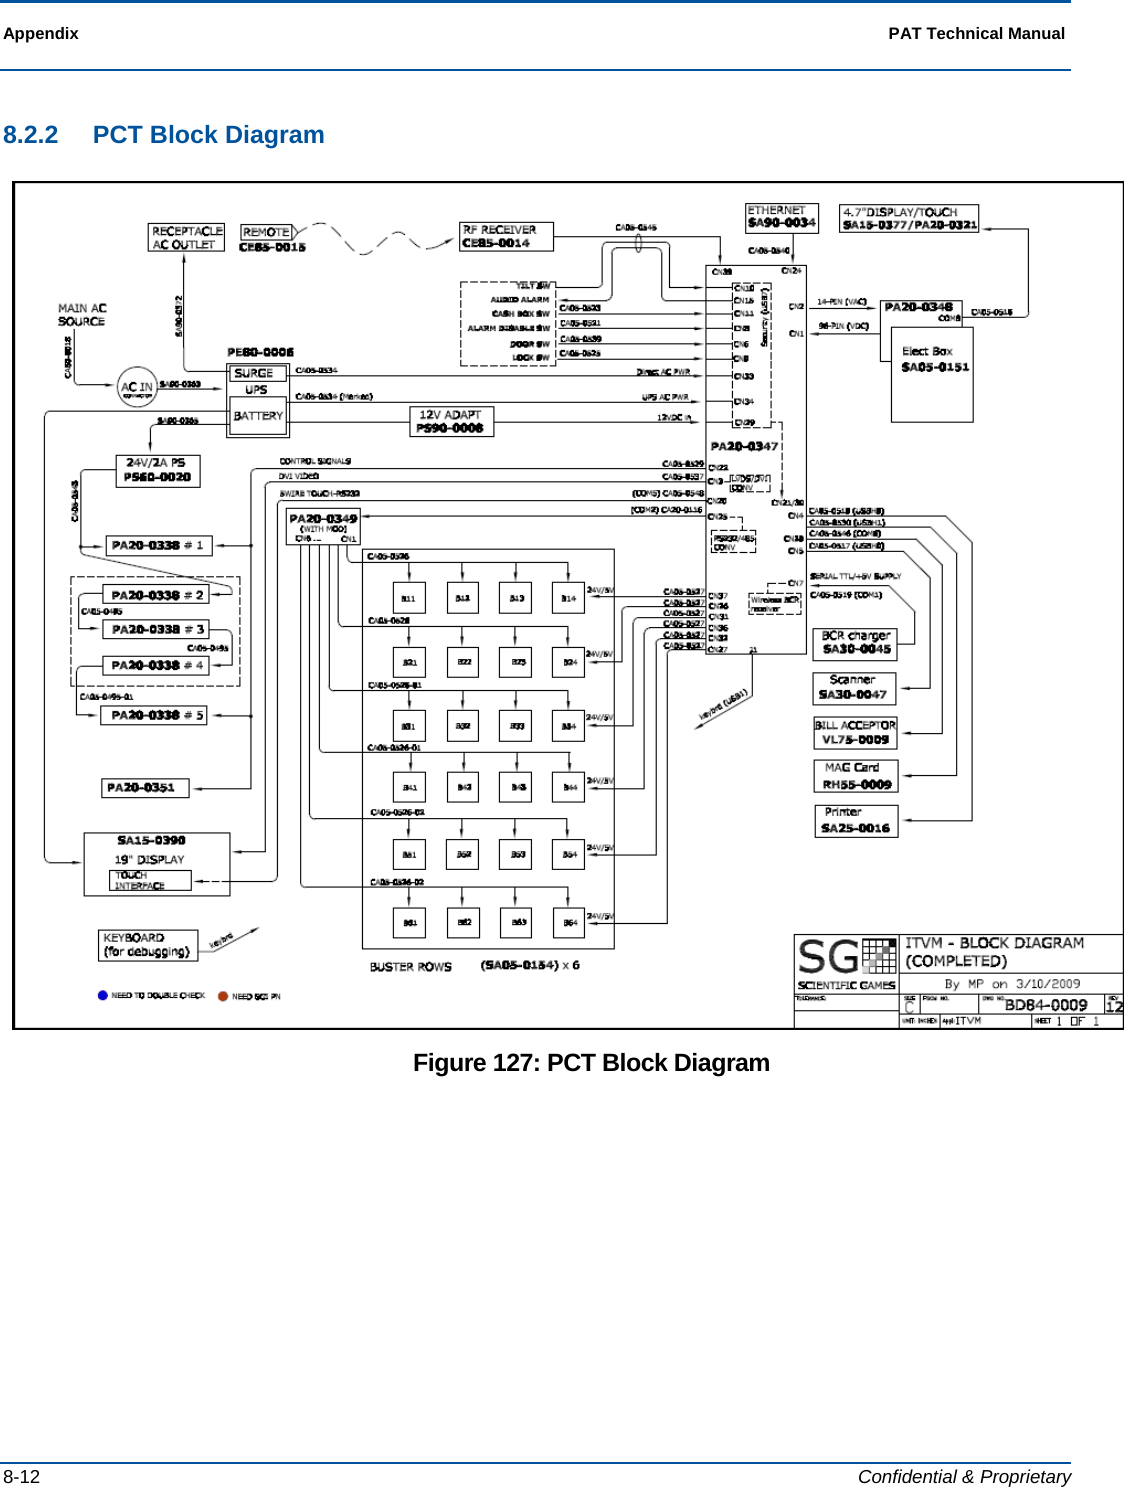  Appendix  PAT Technical Manual  8-12  Confidential &amp; Proprietary 8.2.2  PCT Block Diagram  Figure 127: PCT Block Diagram 